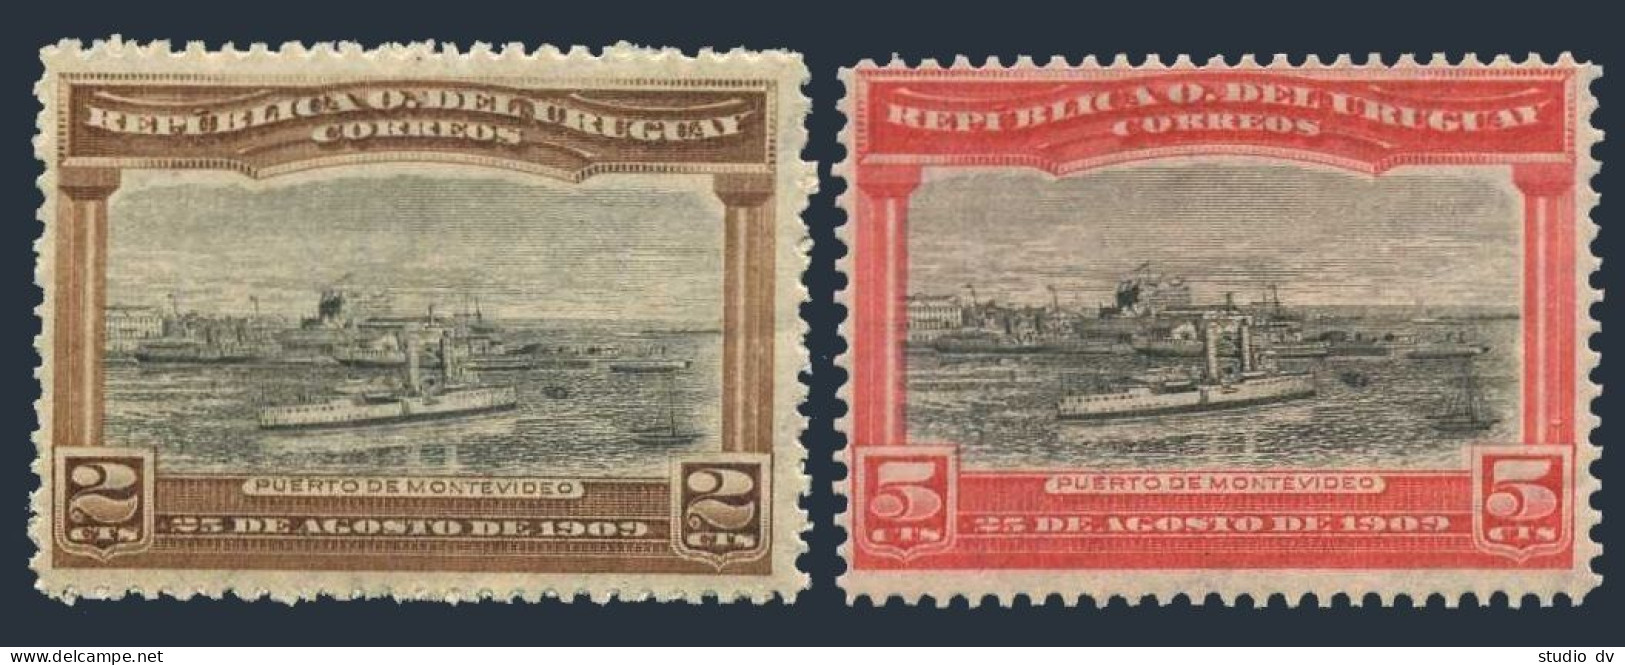 Uruguay 177-178,MNH.Michel 174-175. Port Of Montevideo,1909.Ships. - Uruguay